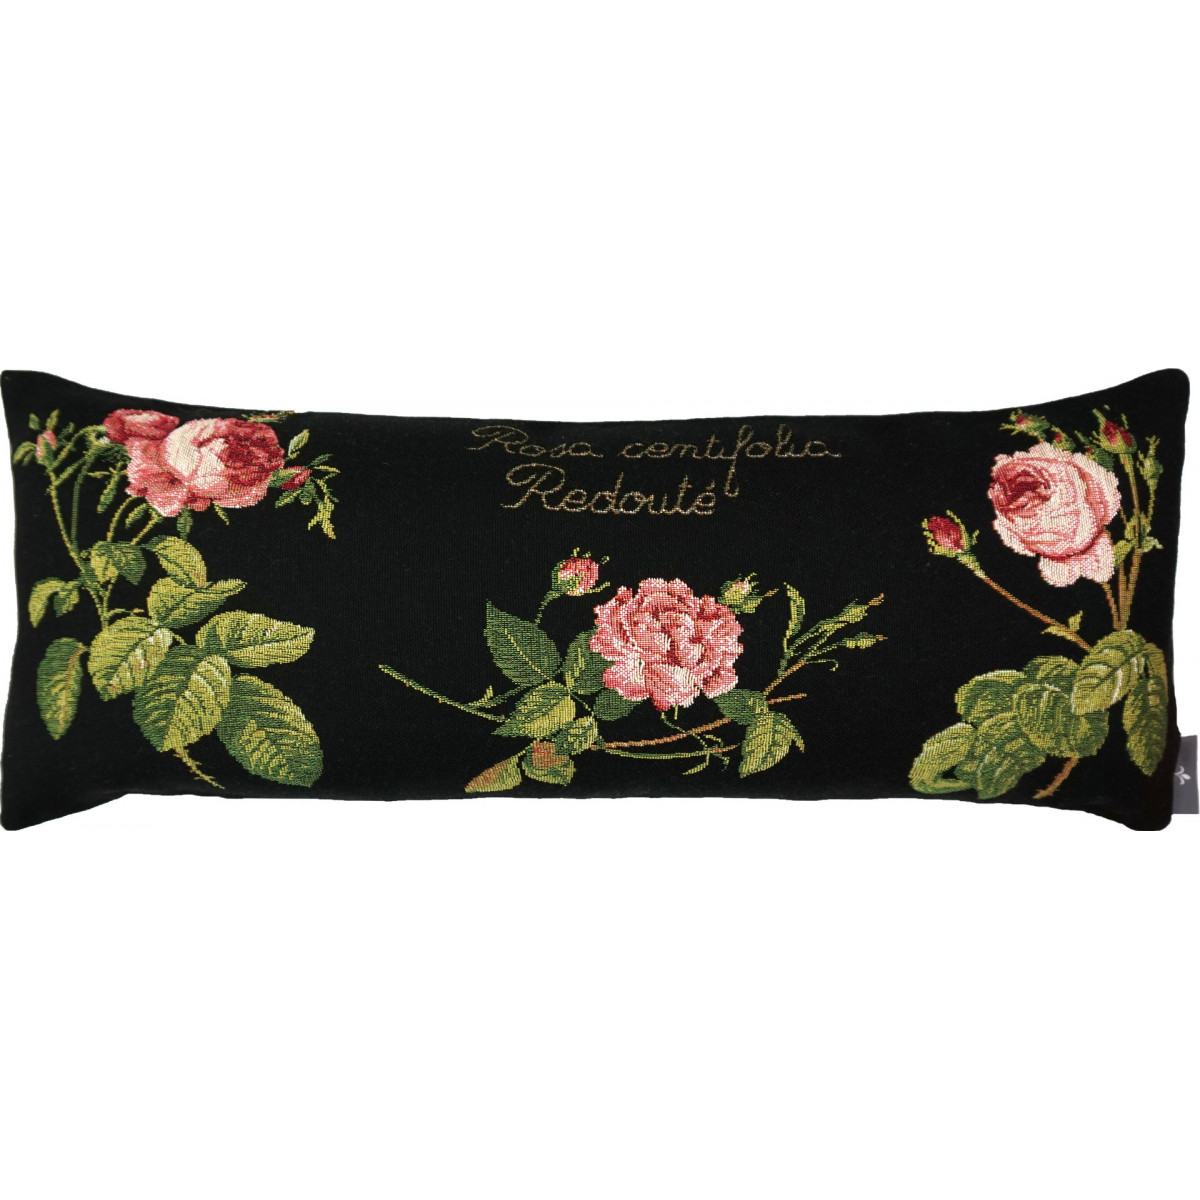 Coussin roses de redouté made in france noir 22x58